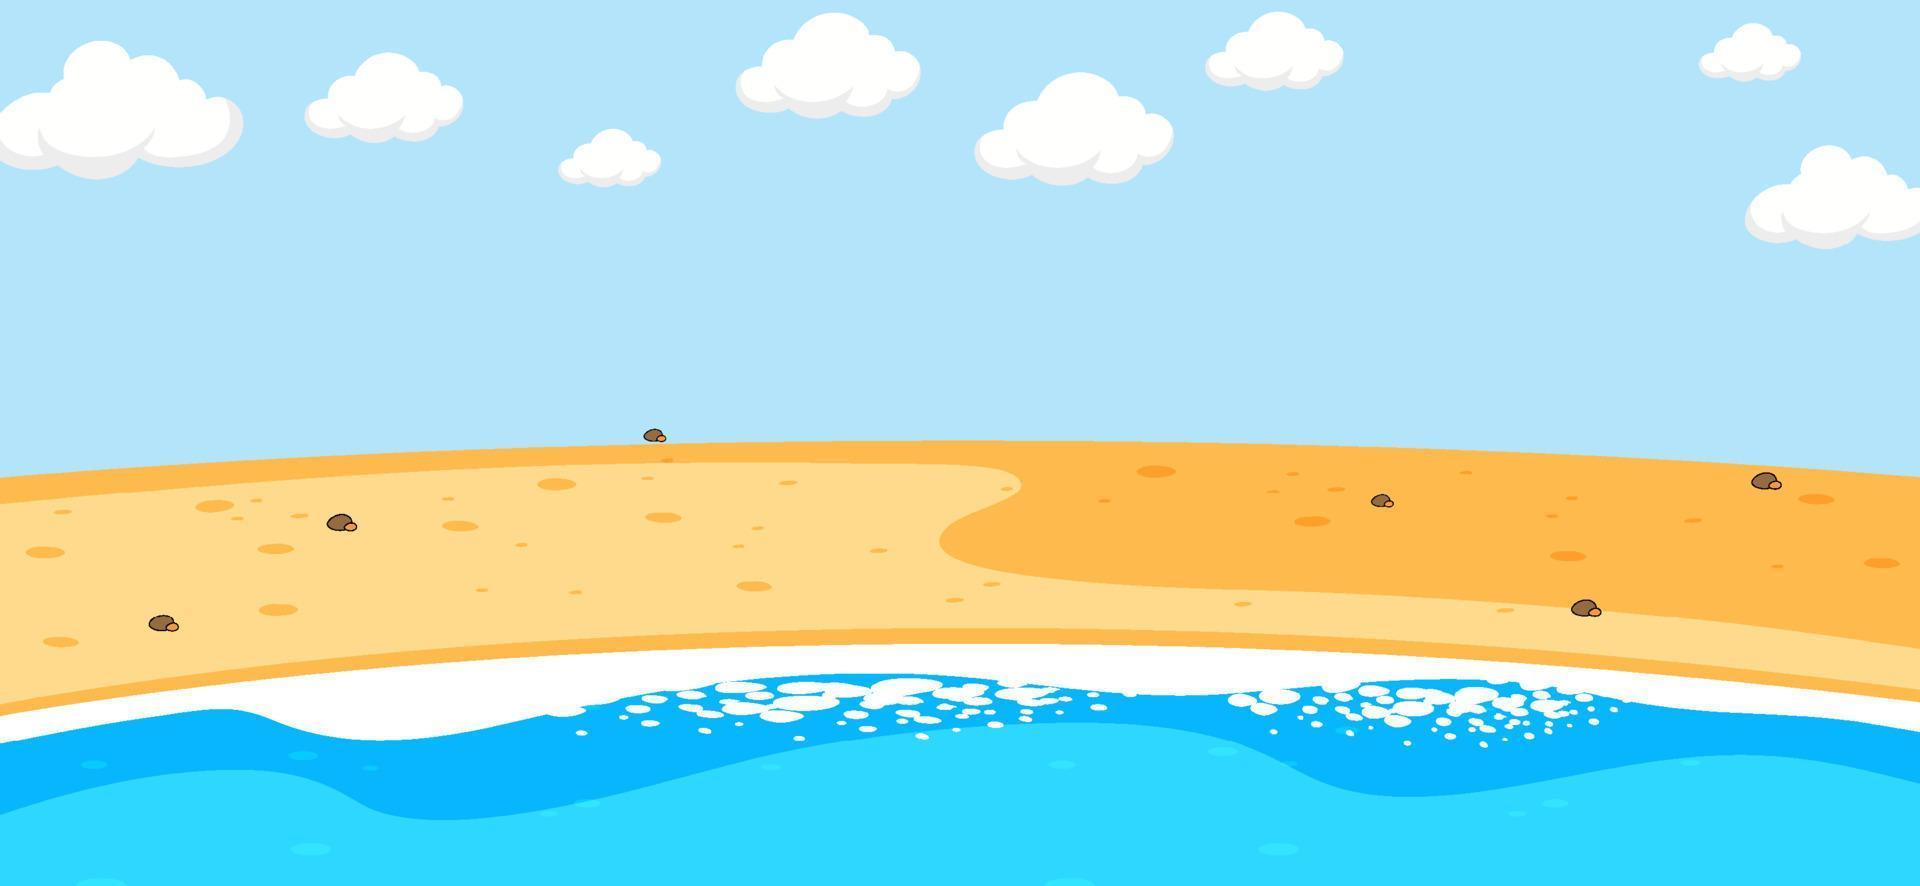 Empty beach scene with blank sky in cartoon style vector